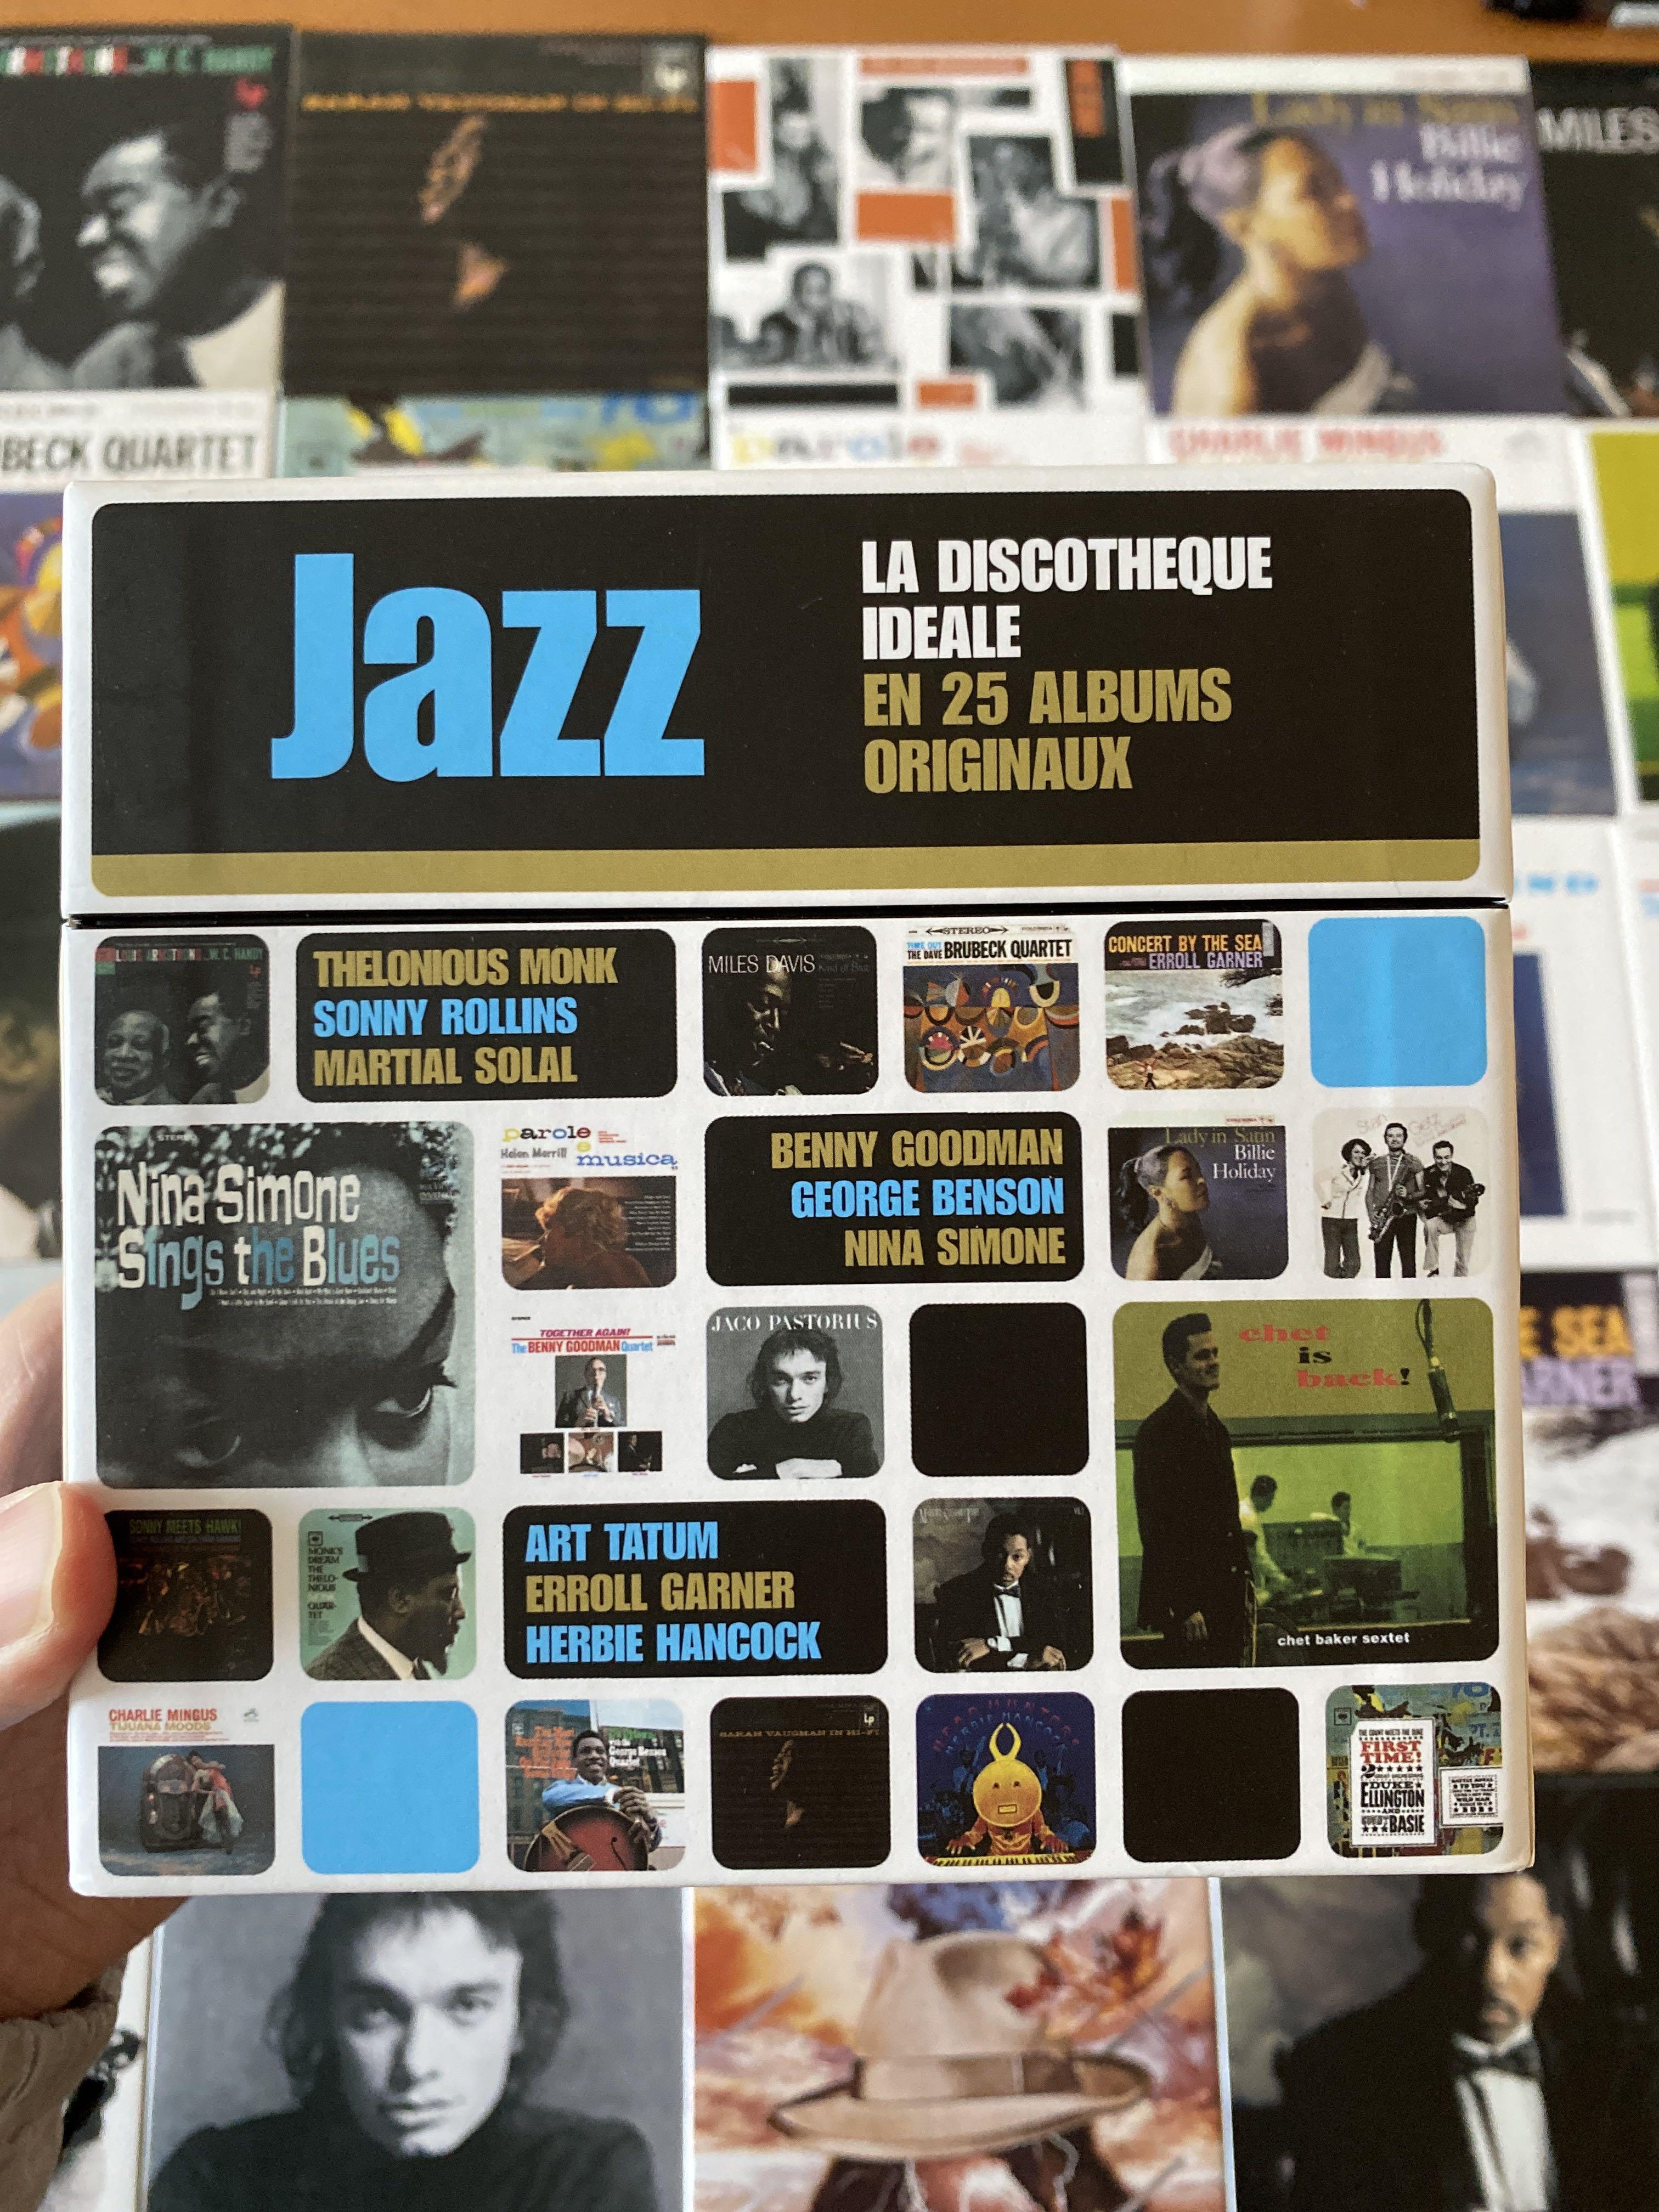 The Perfect Jazz Collection Vol.1 25 Original Albums [25-CD box